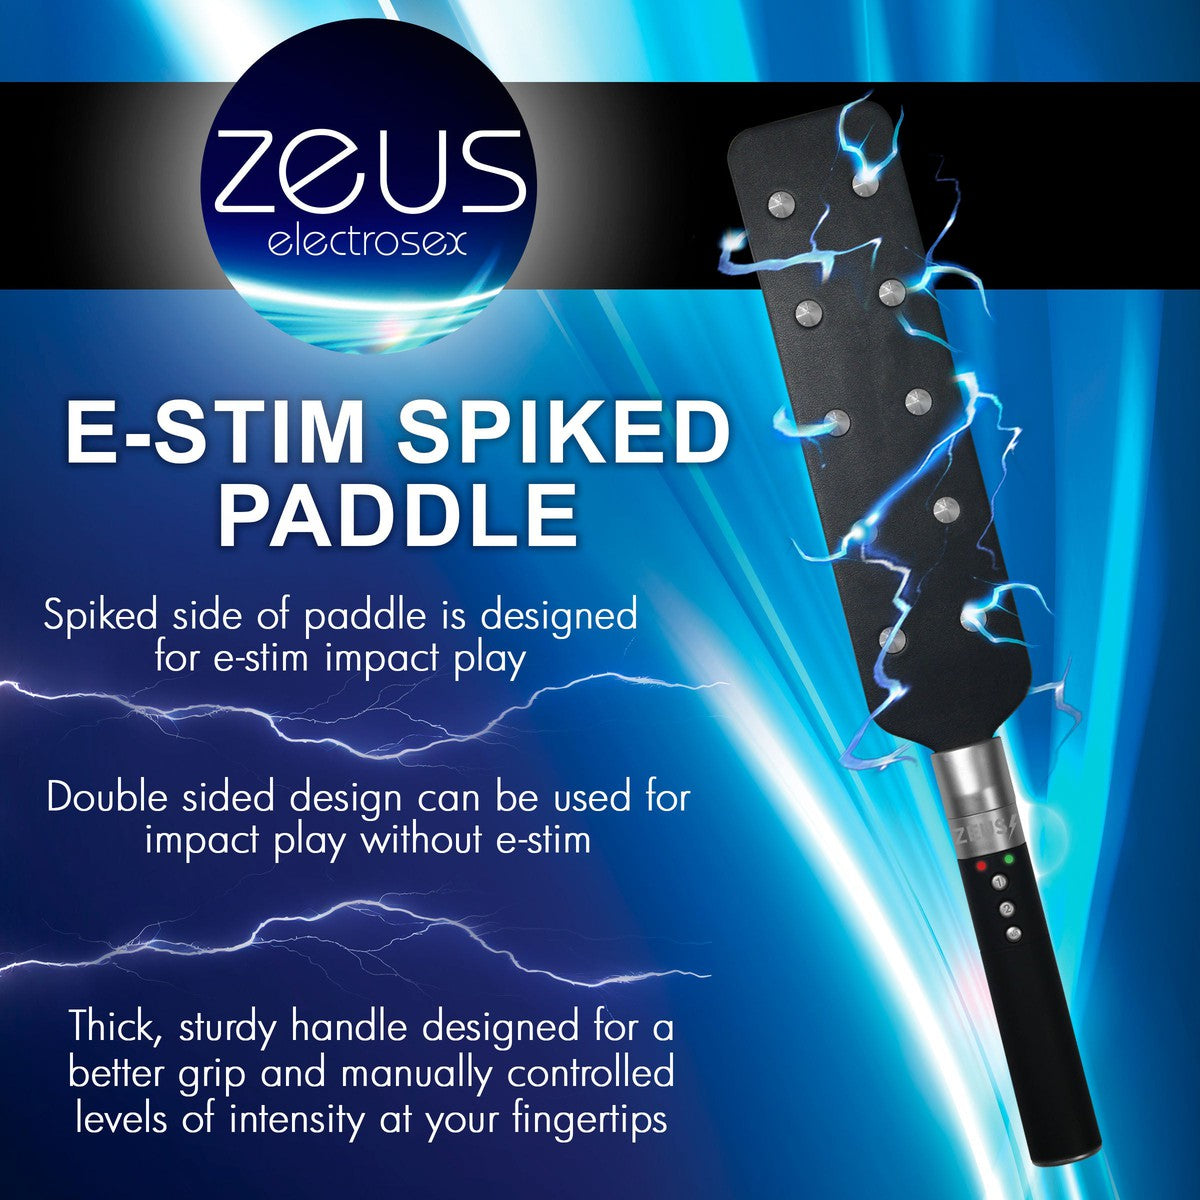 E-stim Spiked Paddle by Zeus Electrosex